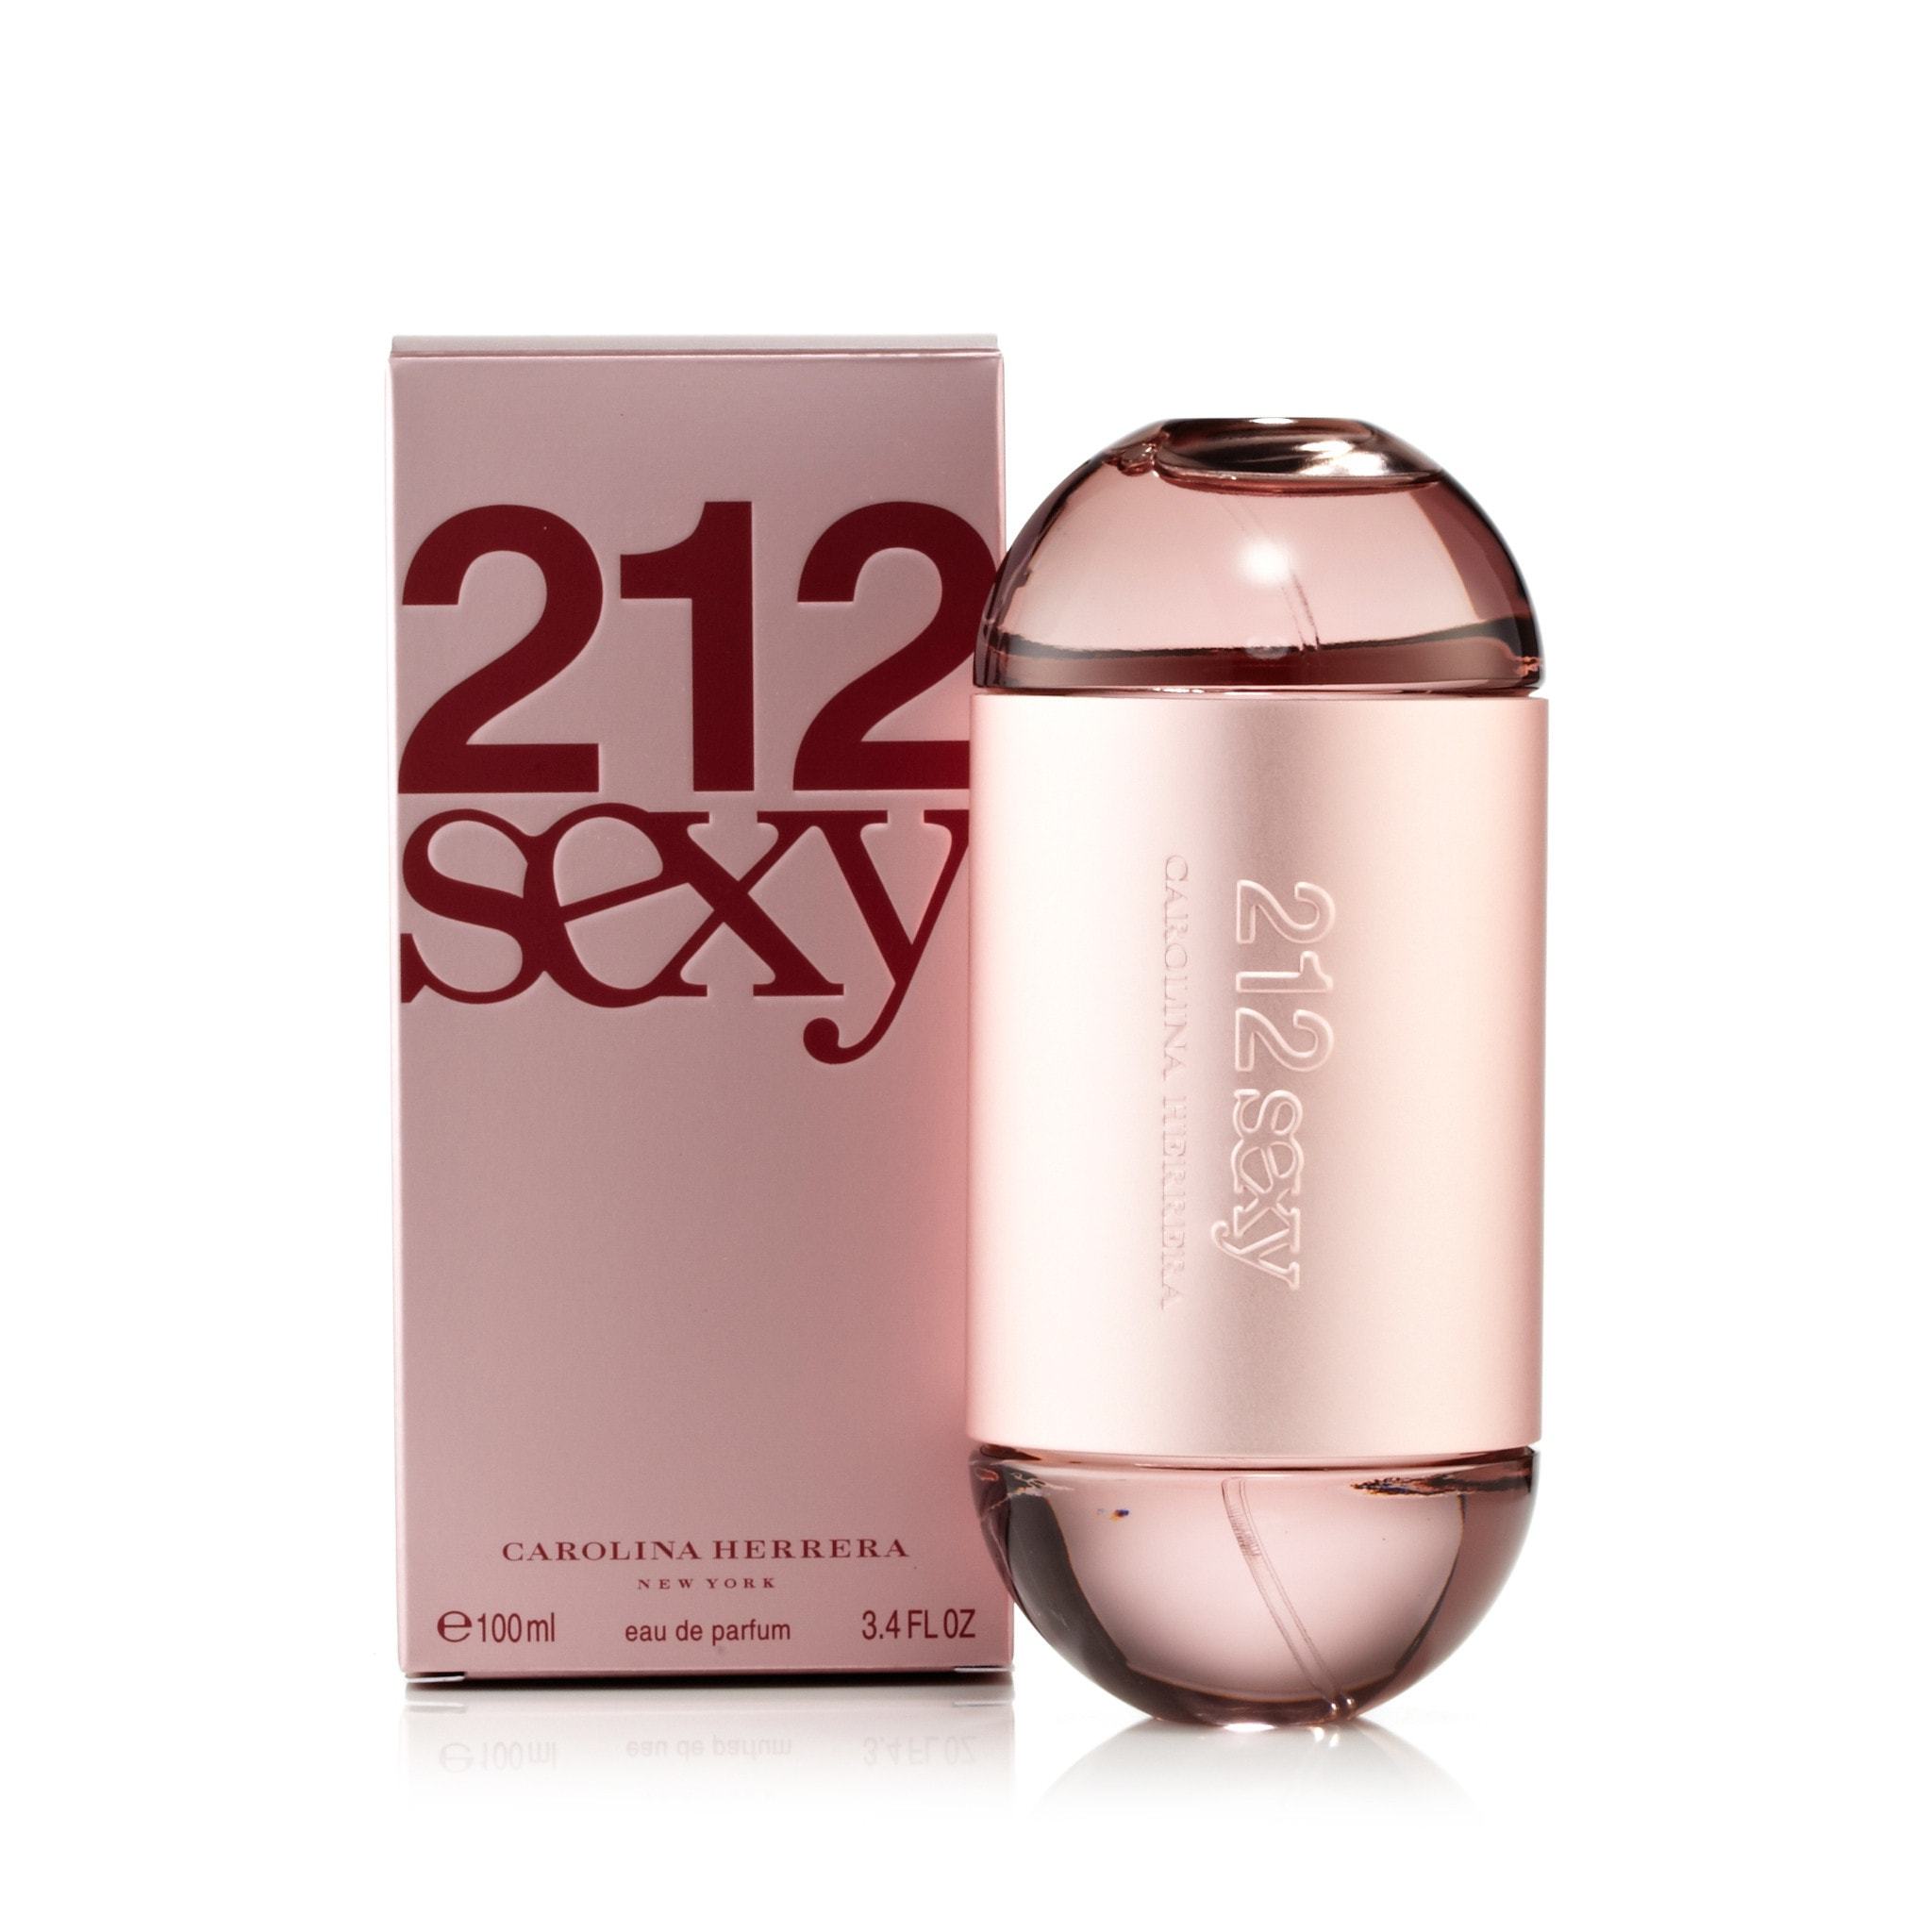 212 Sexy by Carolina Herrera - Buy online